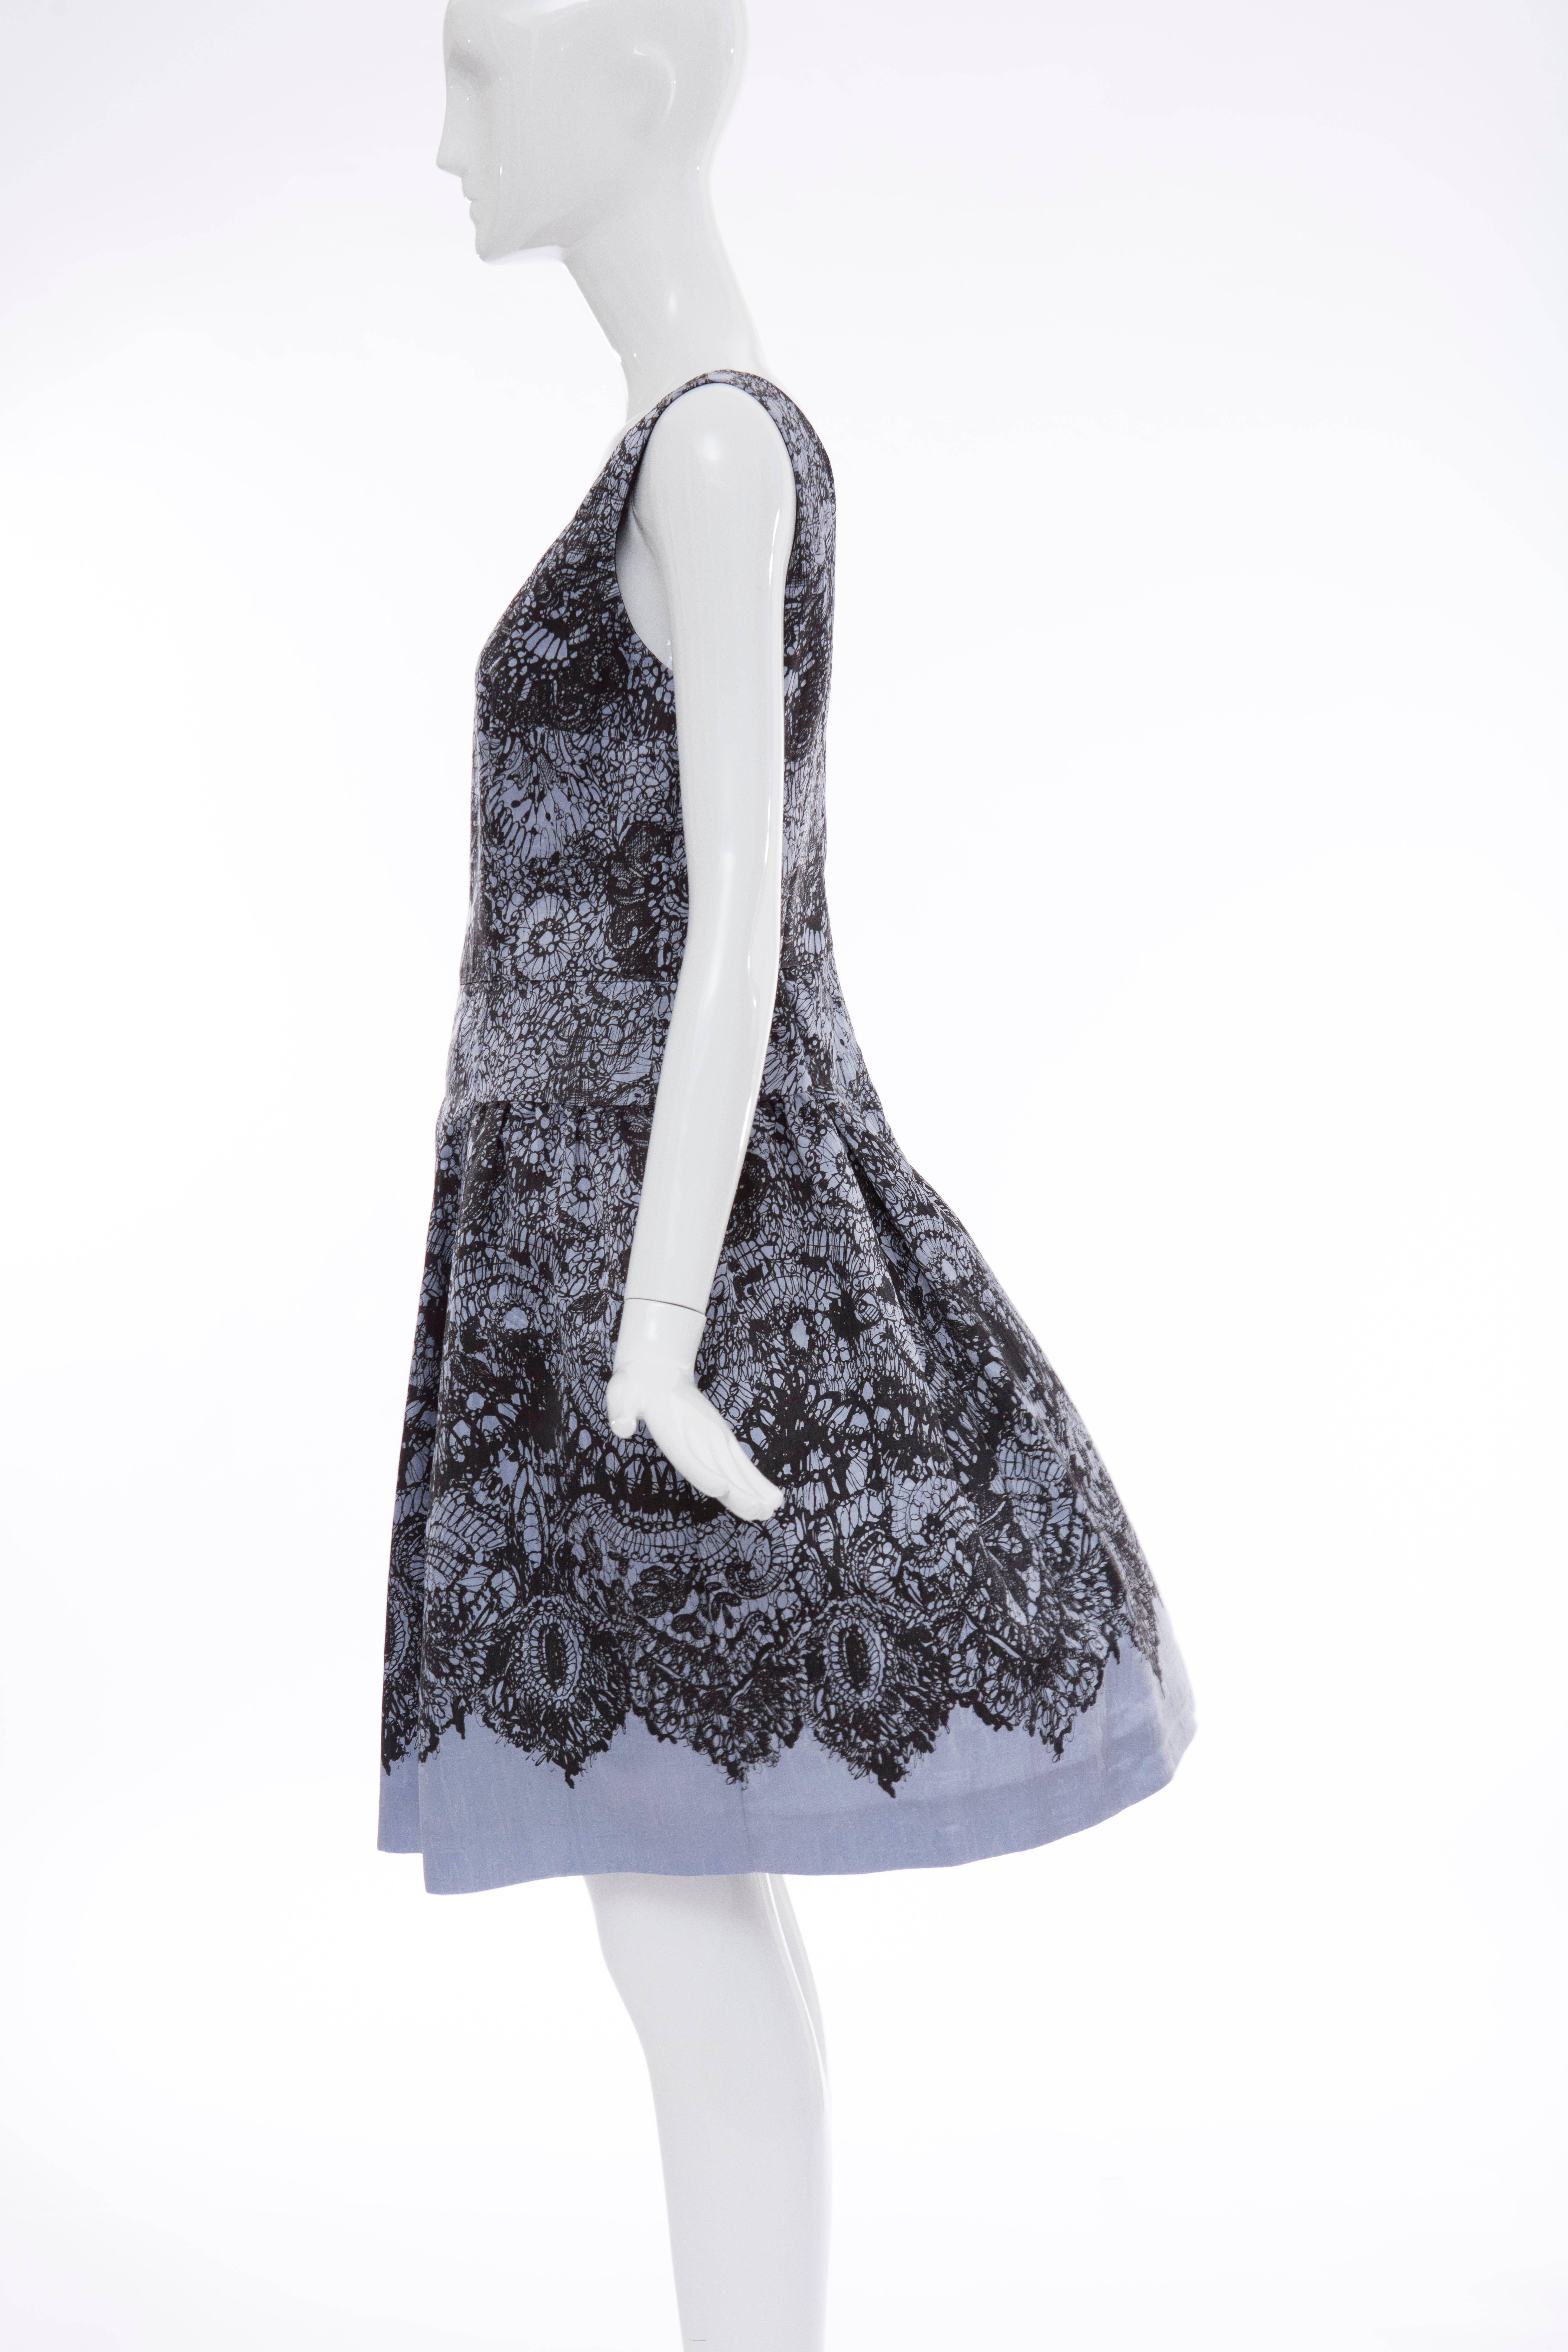 Prada Printed Viscose Silk Nylon Sleeveless Dress, Circa 2011 For Sale 3